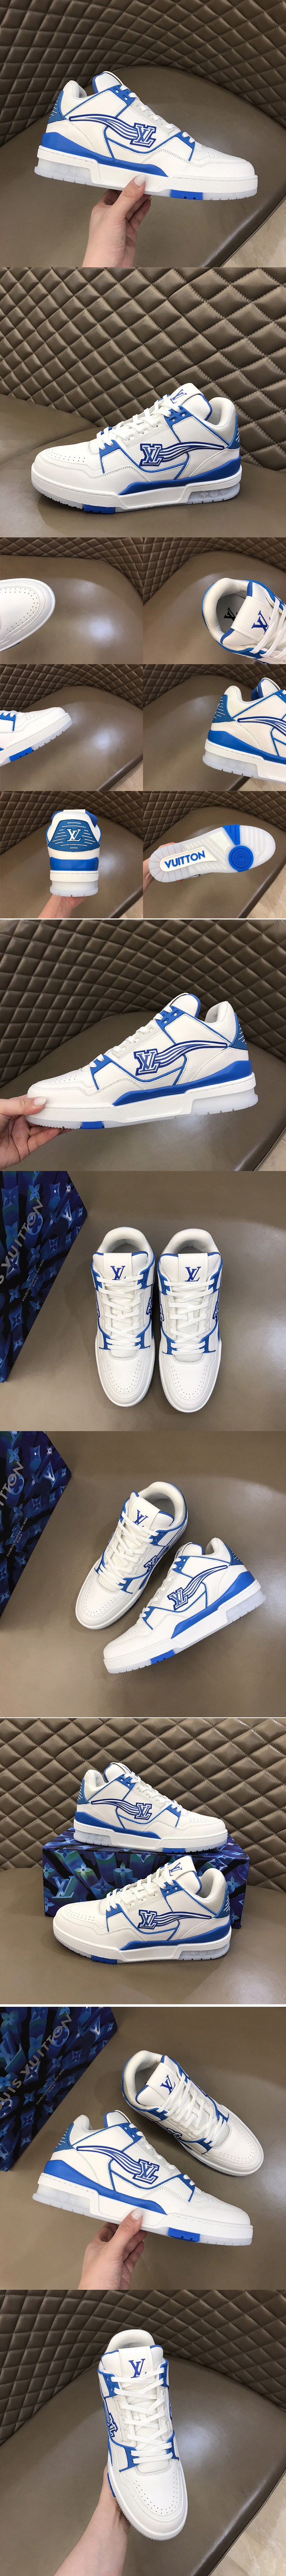 Replica Louis Vuitton 1A8AGO LV Trainer sneaker in Azur Blue With White Calf leather